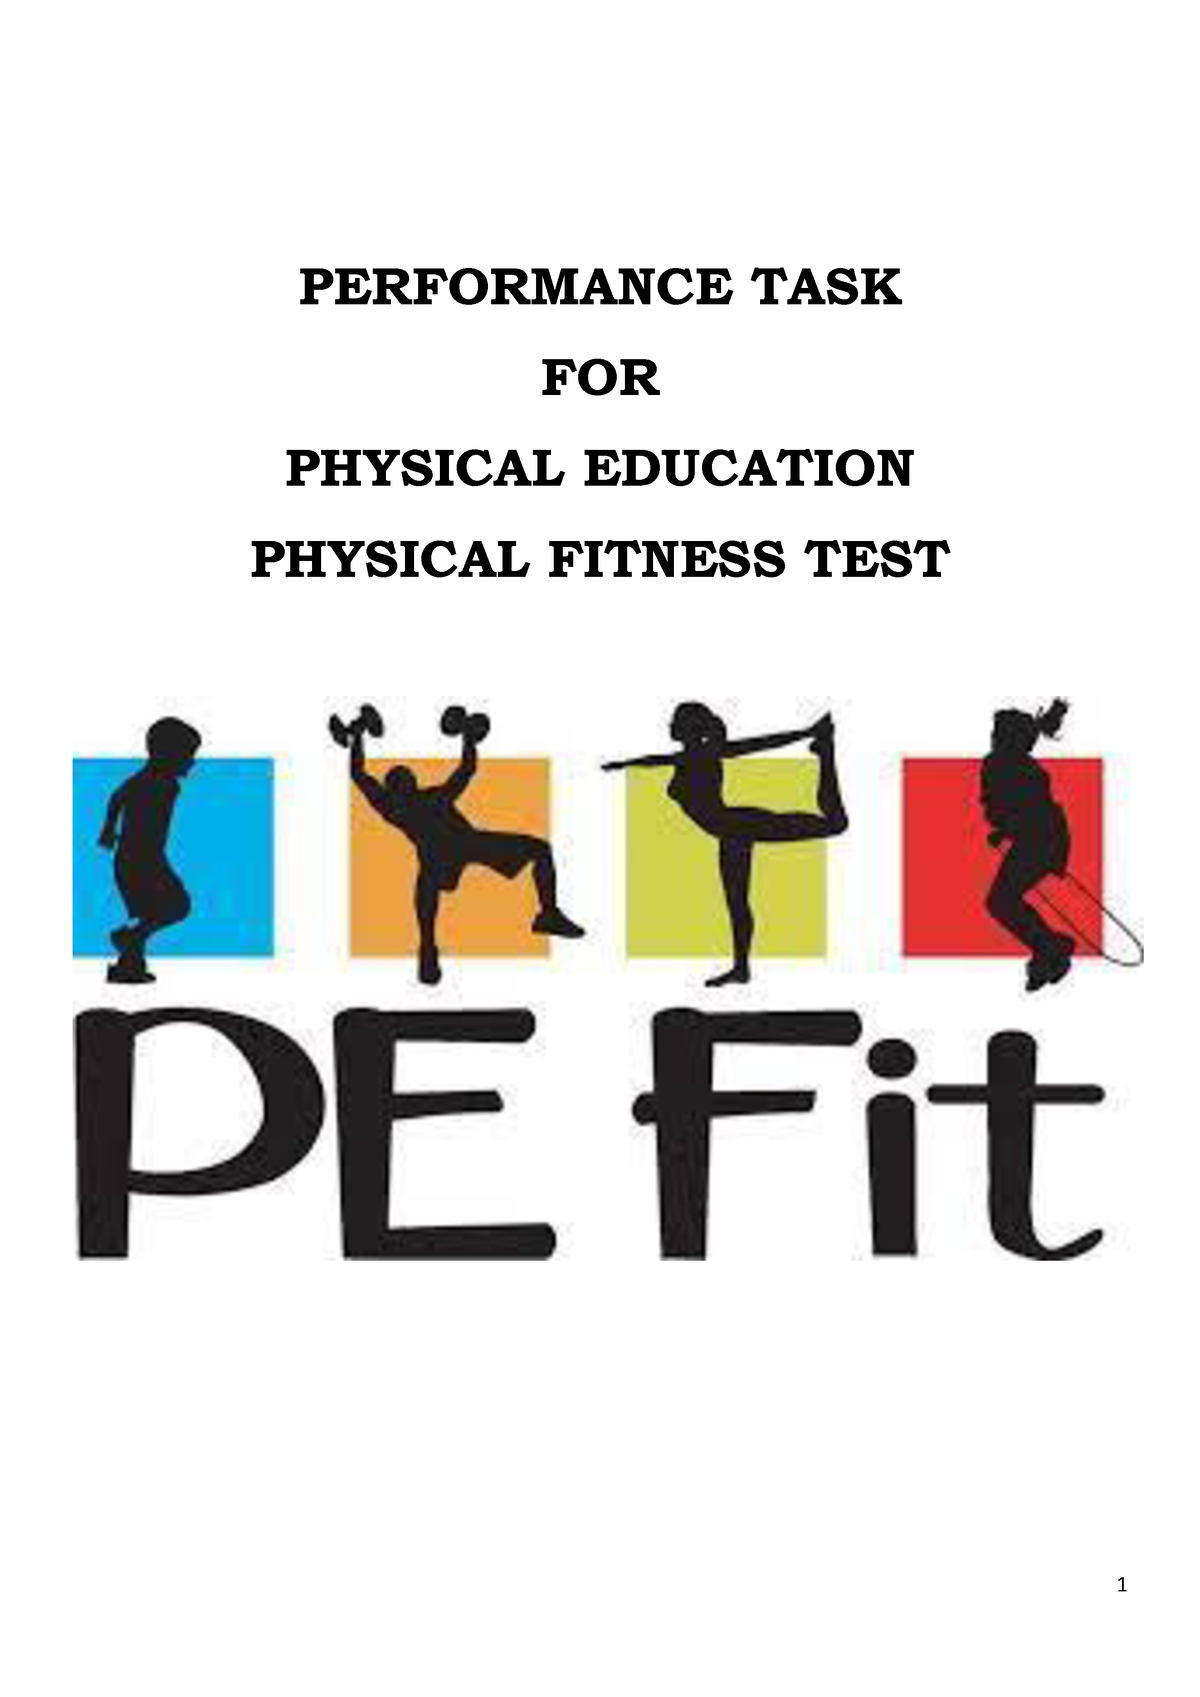 physical education performance tasks